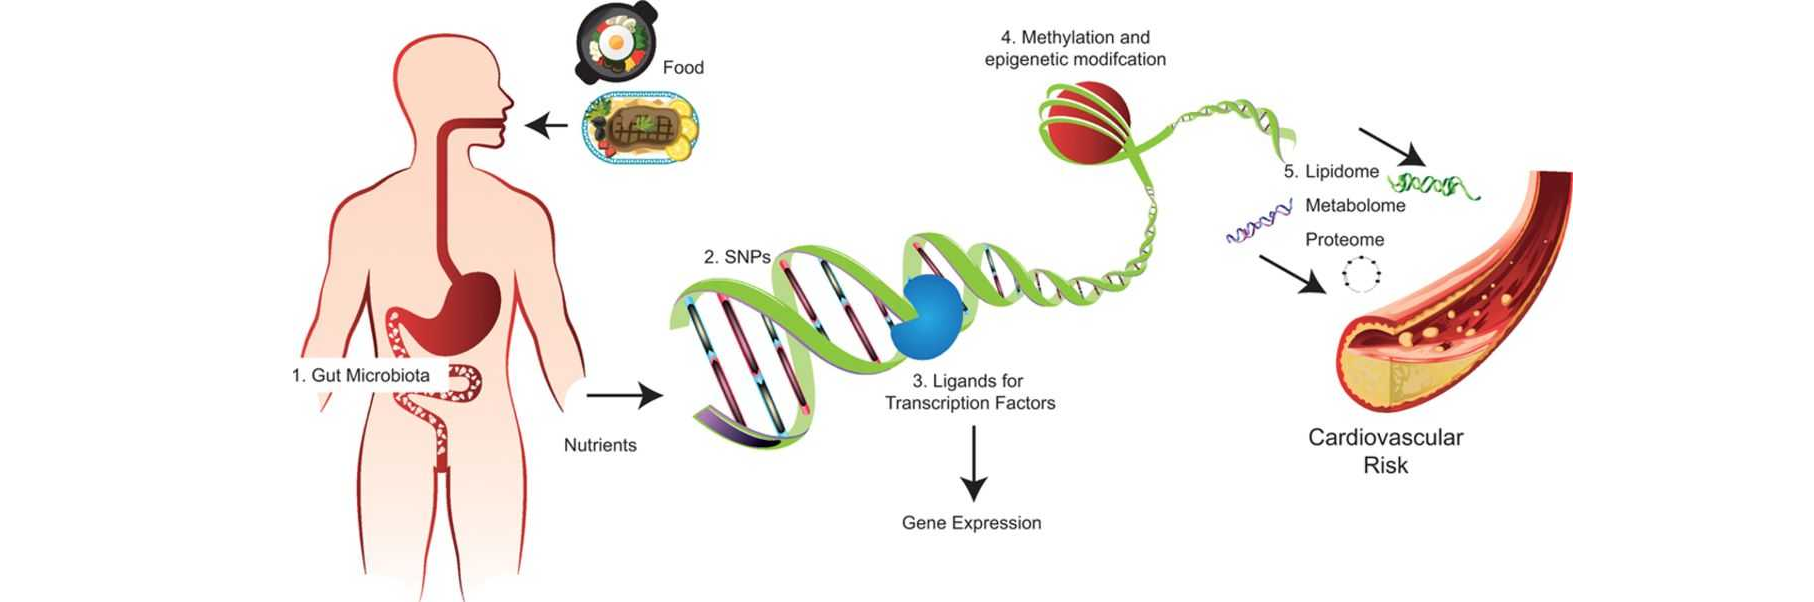 Epigenetics Focused Set